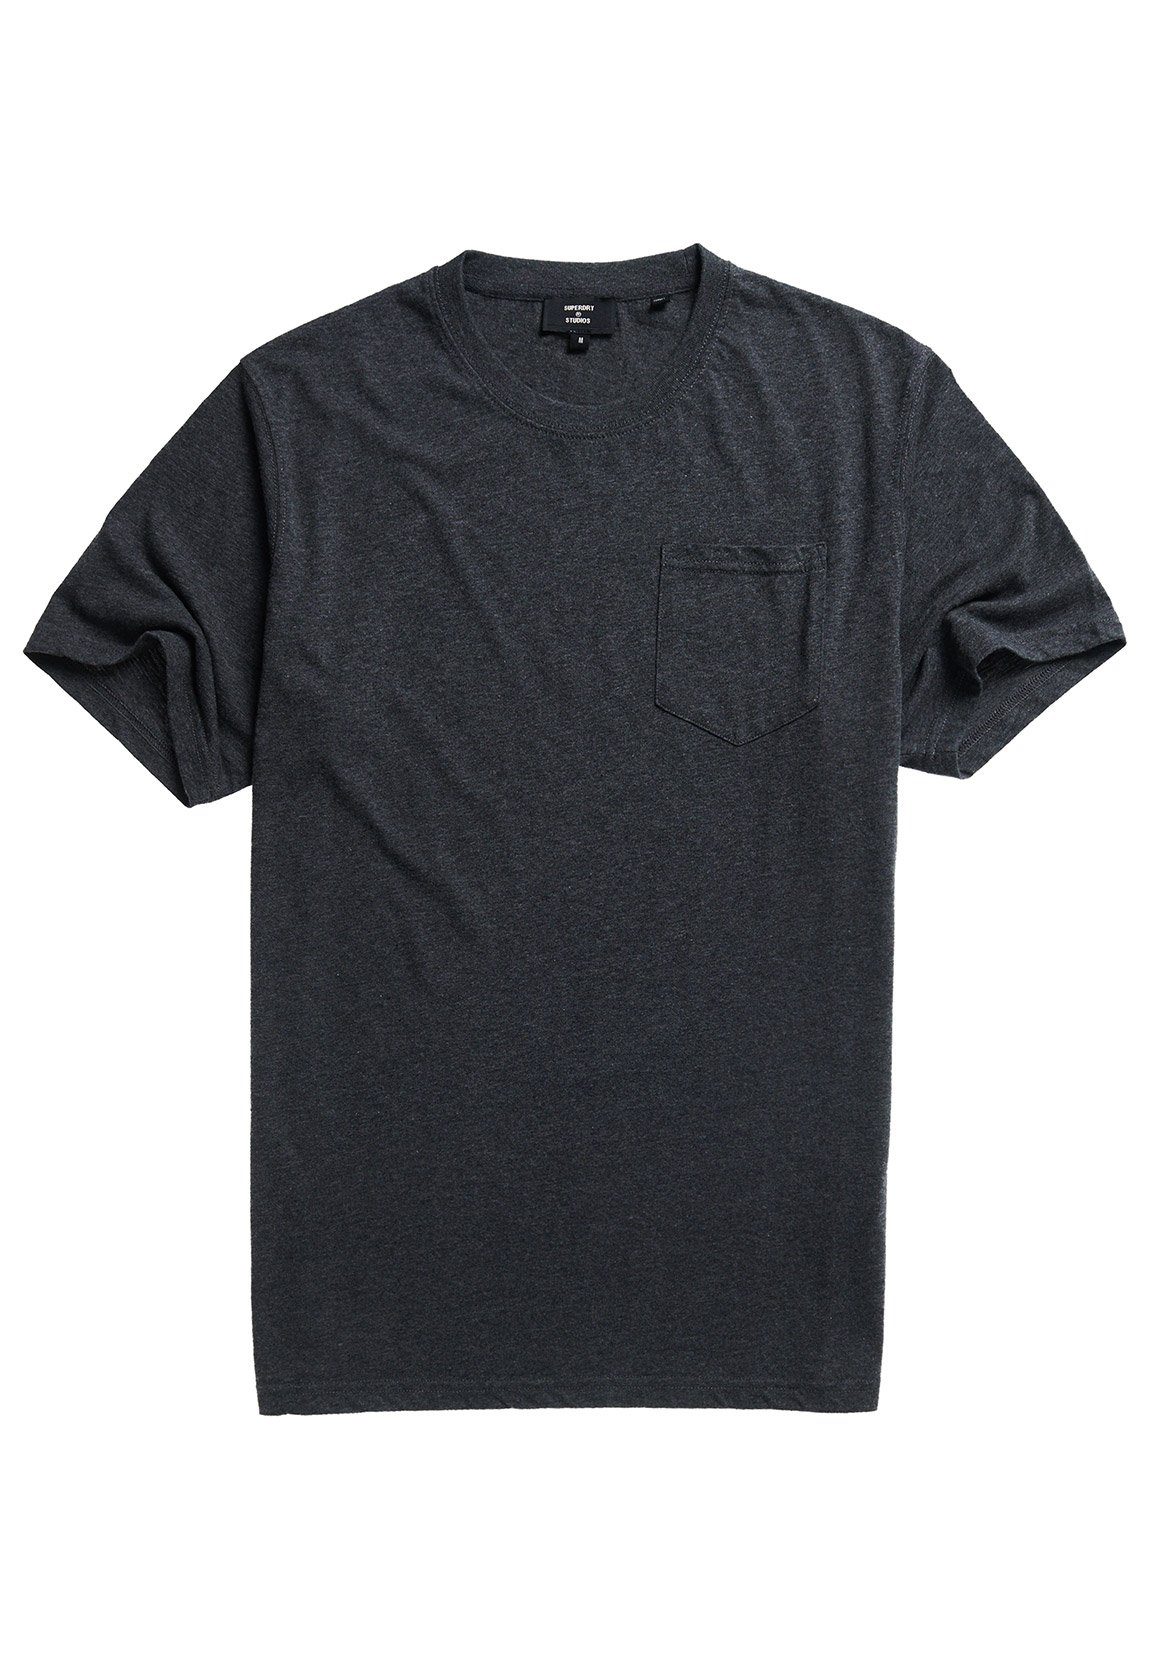 TEE T-Shirt COTTON Superdry AUTHENTIC Superdry Dunkelgrau Marl T-Shirt Charcoal Herren